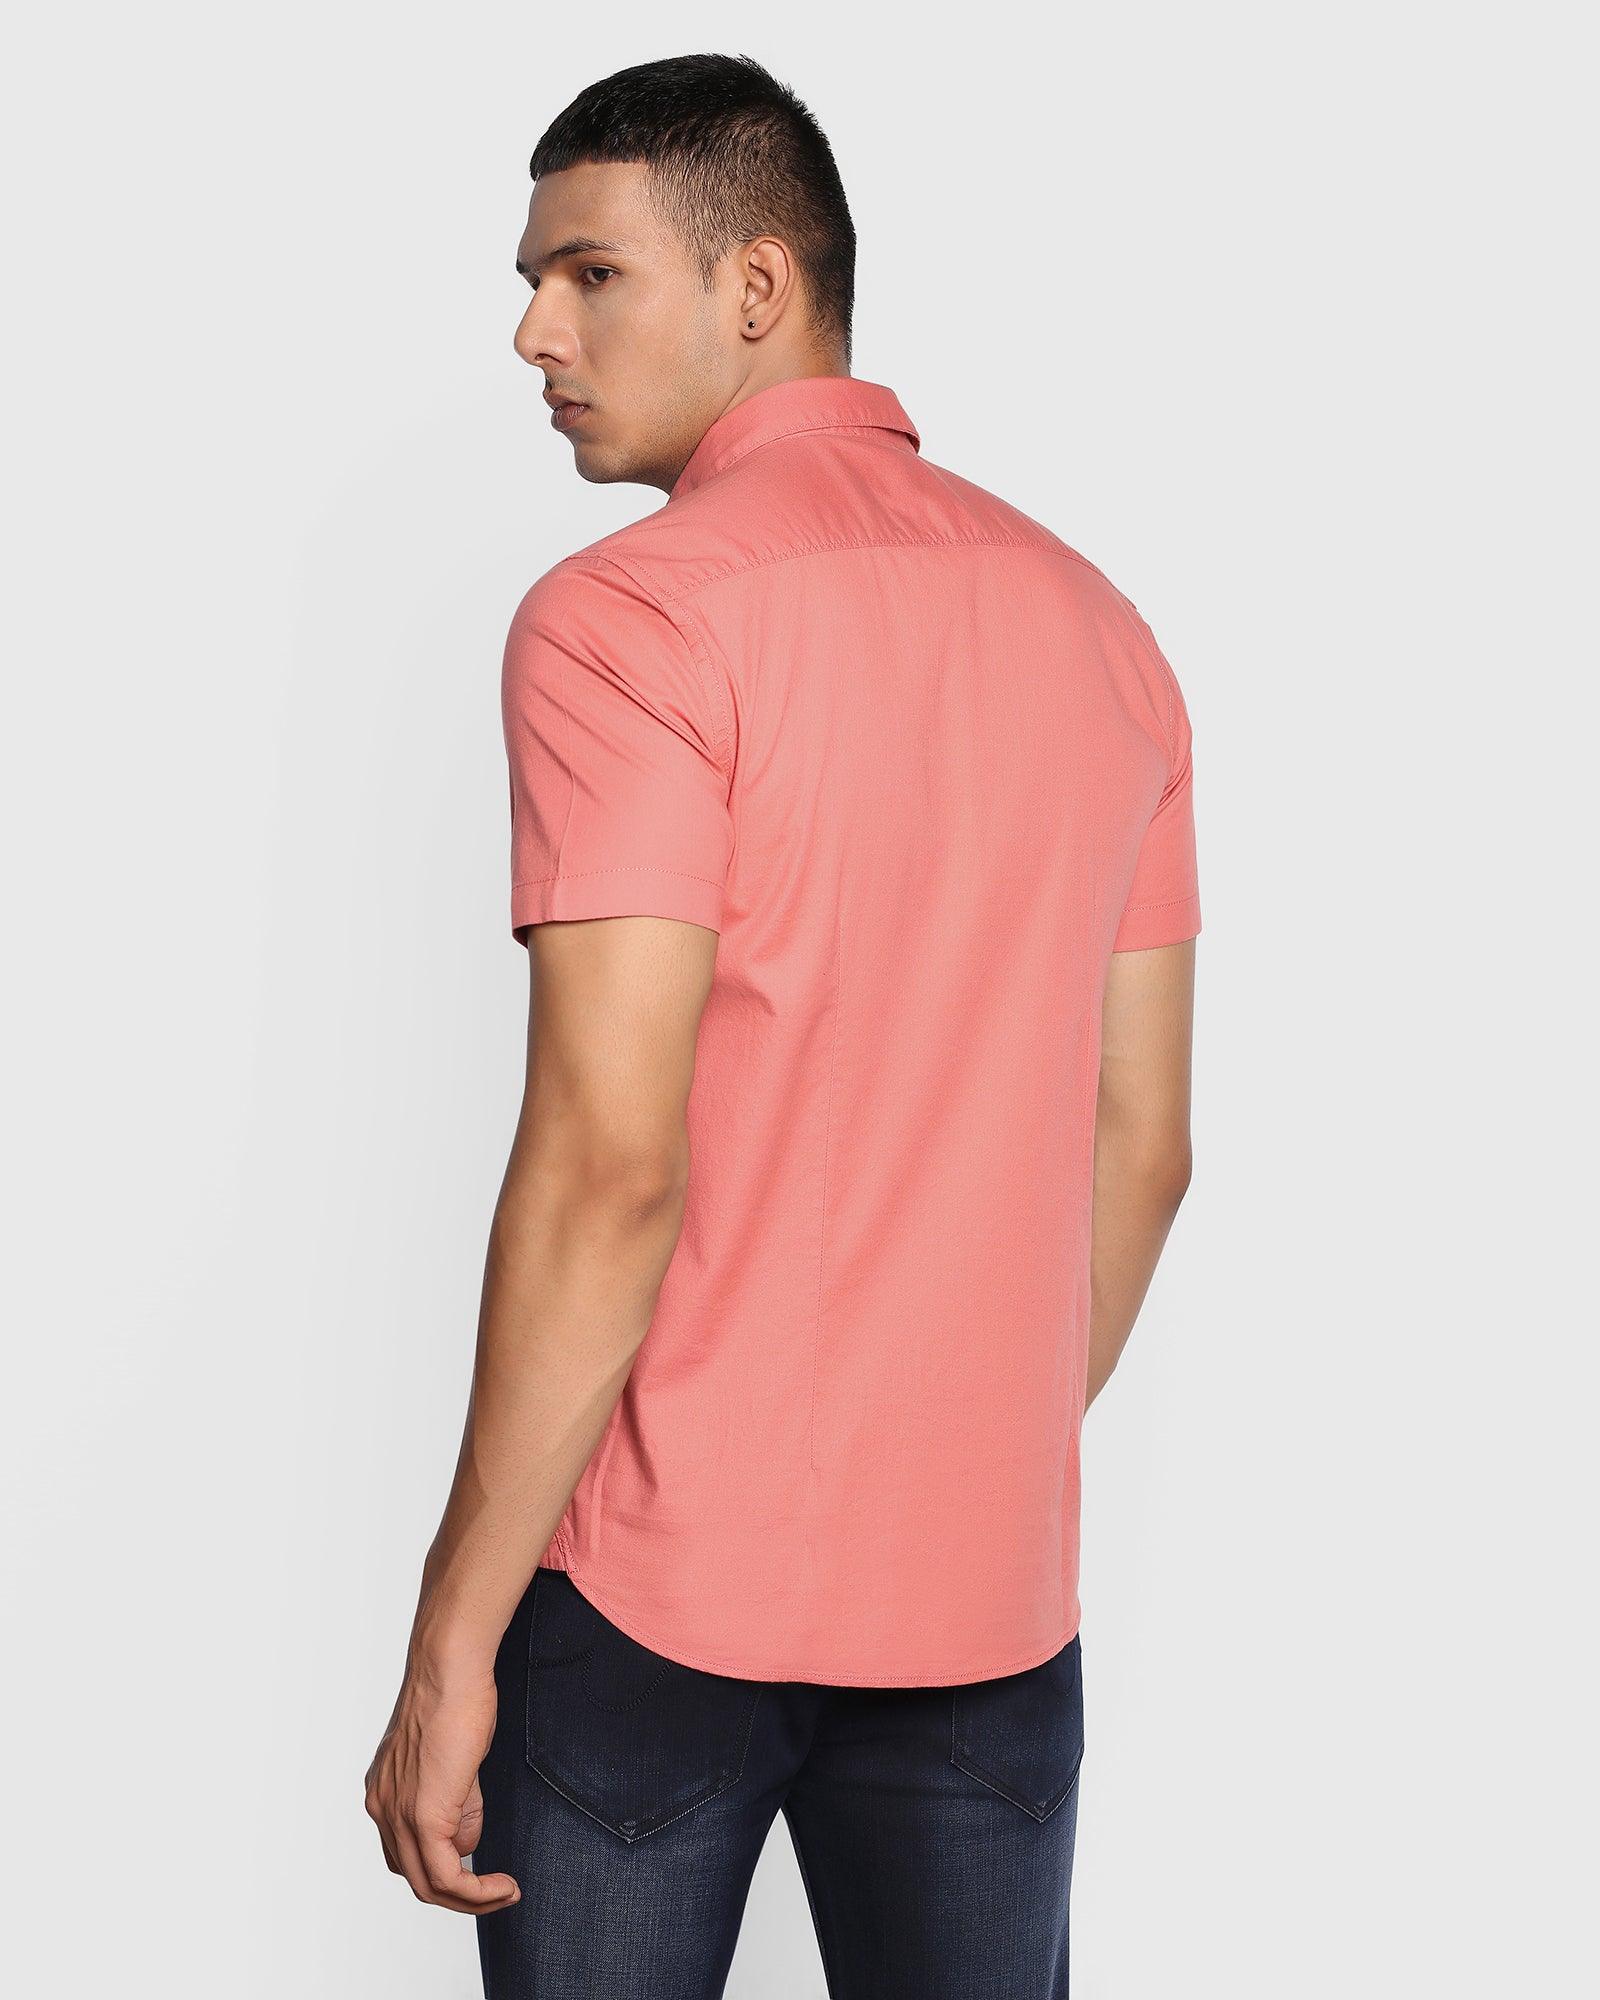 Formal Half Sleeve Pink Solid Shirt - Scott